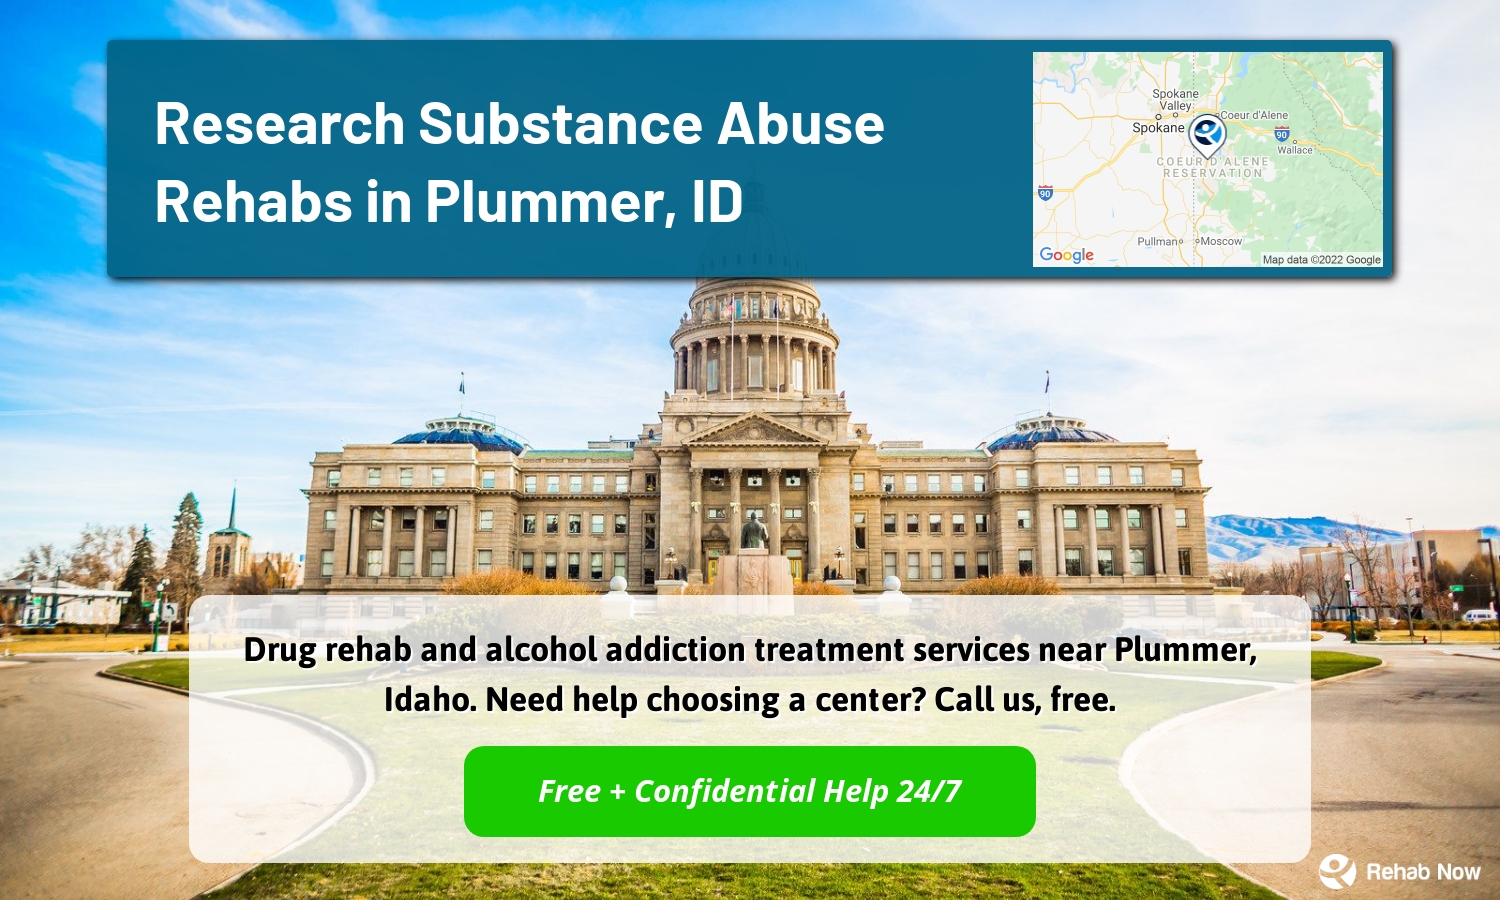 Drug rehab and alcohol addiction treatment services near Plummer, Idaho. Need help choosing a center? Call us, free.